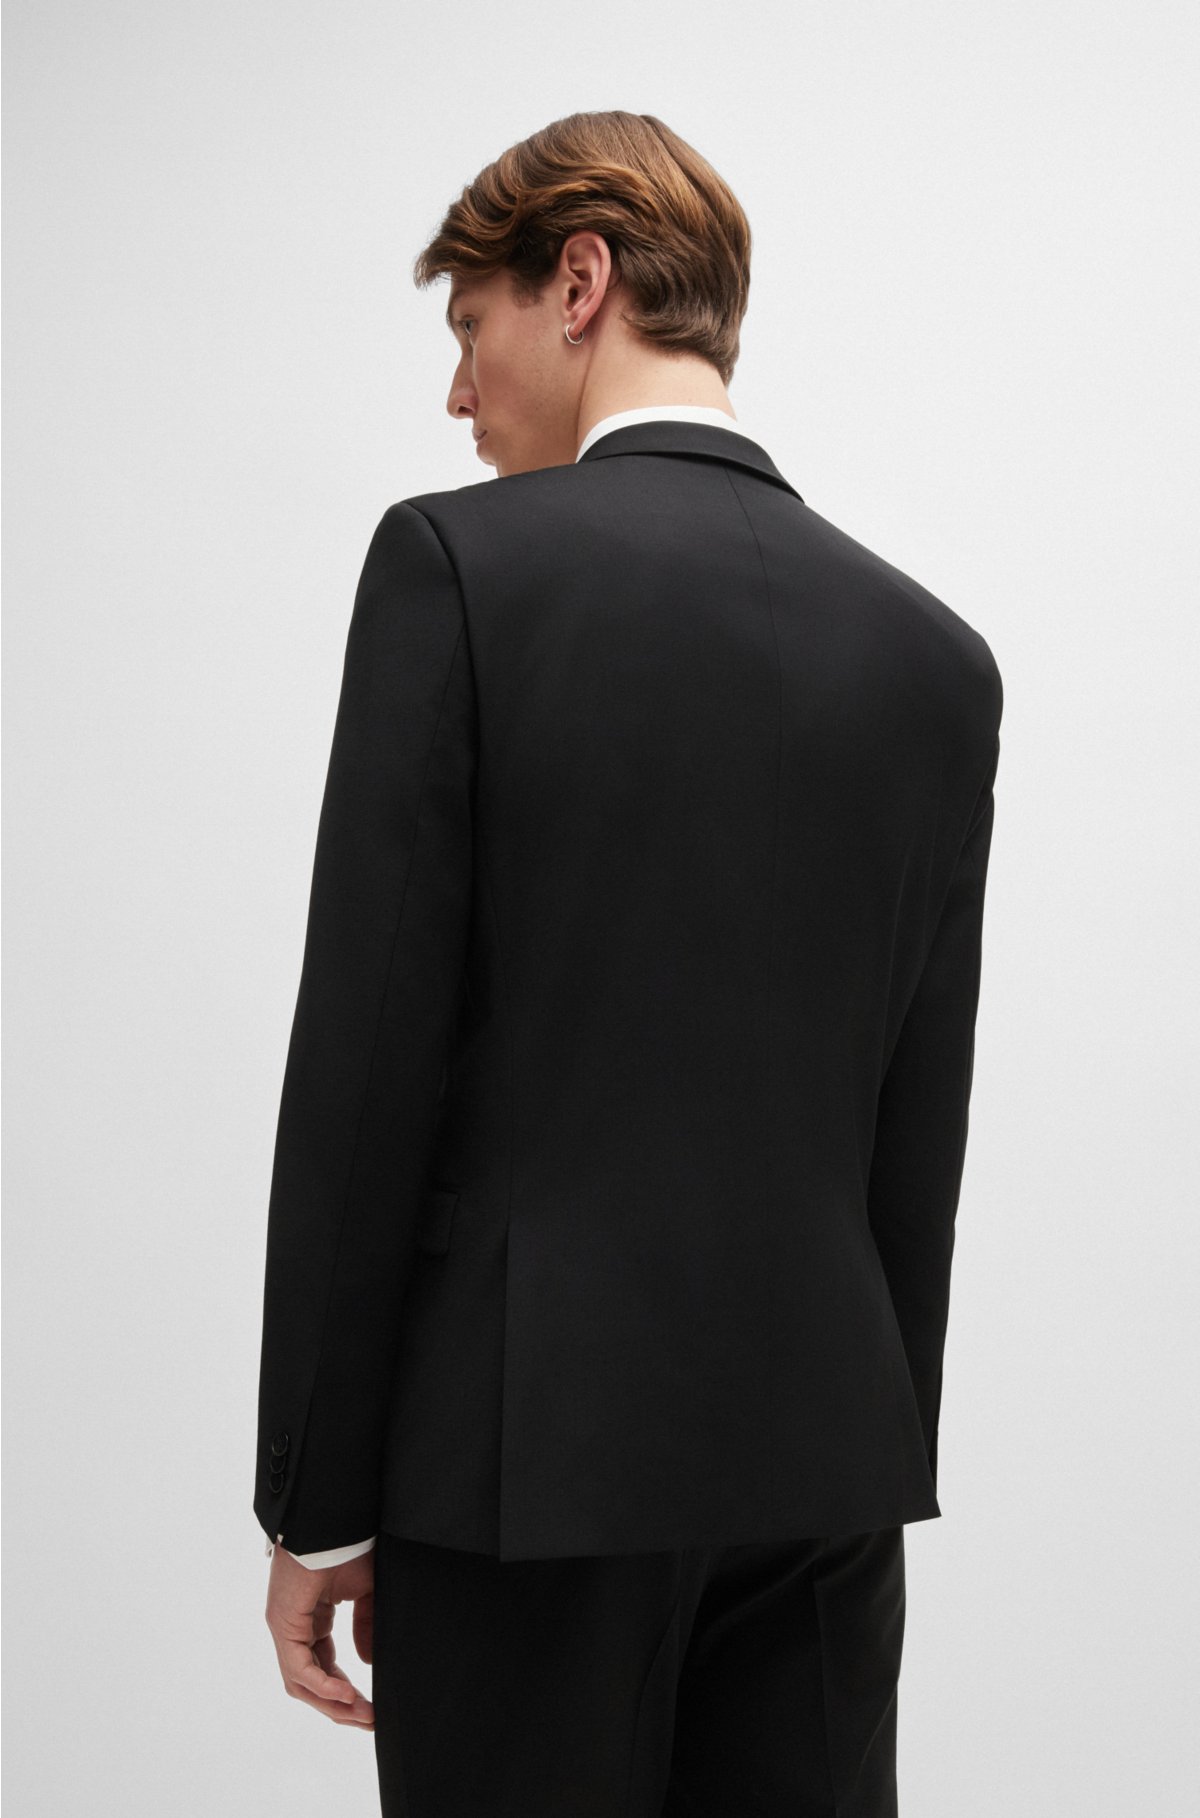 Men's Slim Fit Stretch Jacket – The Hatbox